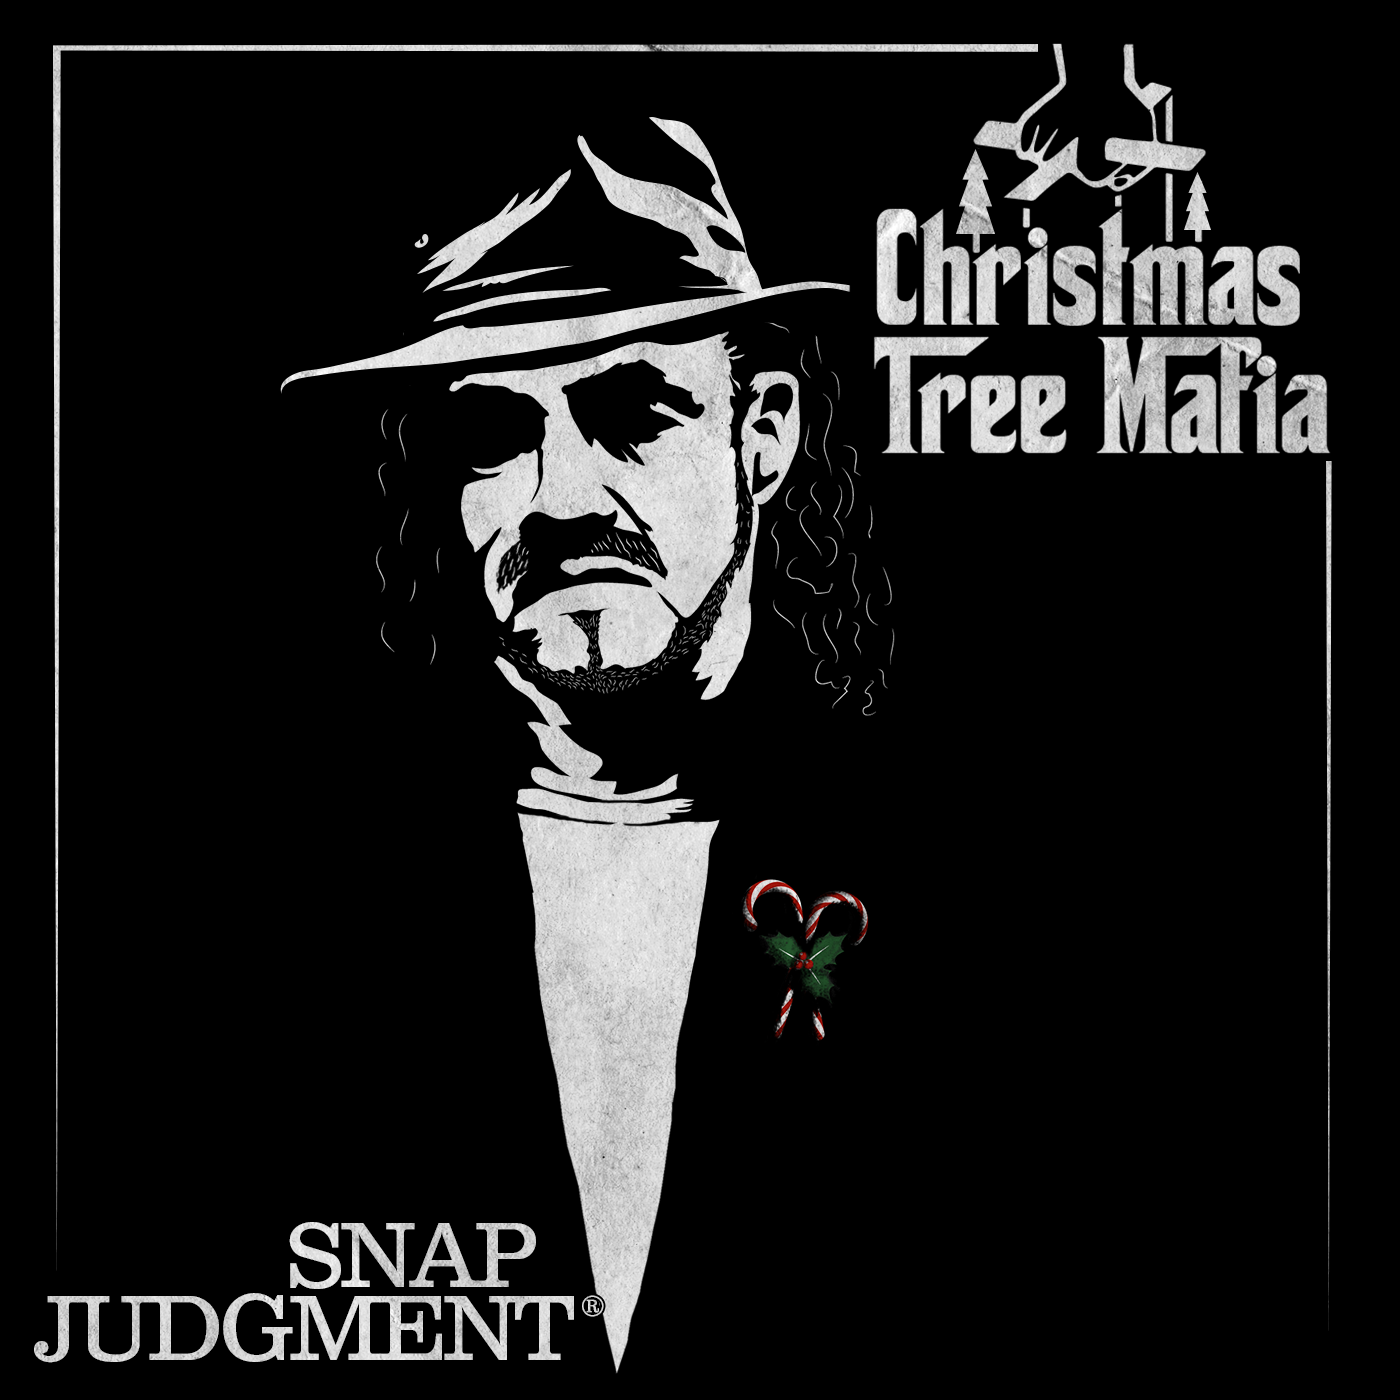 The Christmas Tree Mafia - Snap Classic